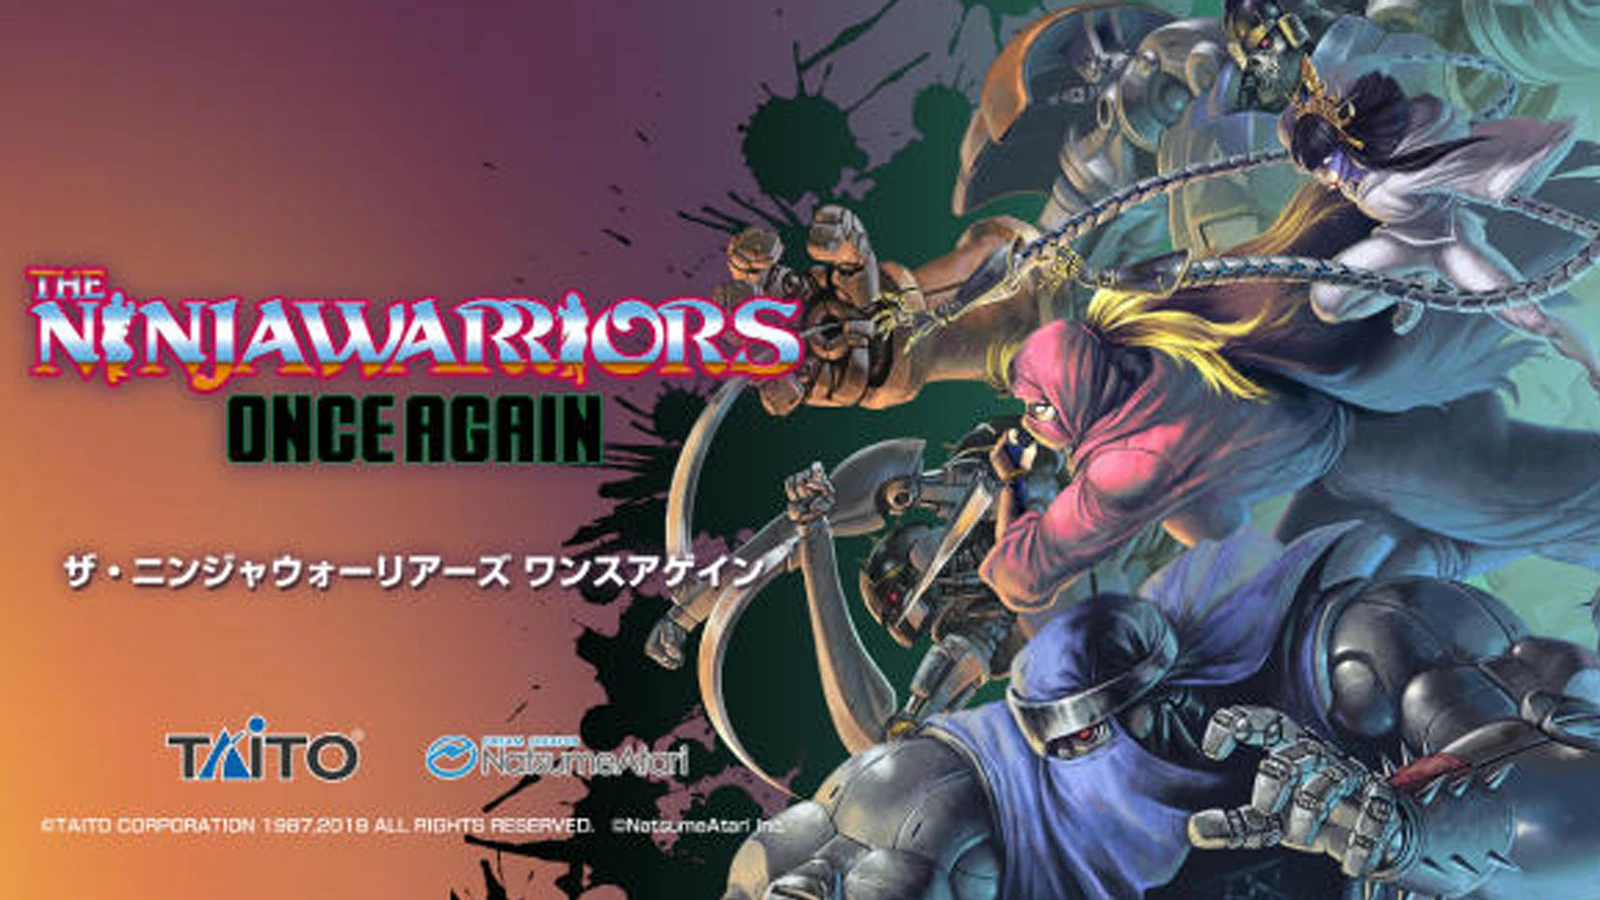 横版卷轴忍者游戏《The Ninja Warriors: Once Again》将在7月25日登陆PS4和NS平台